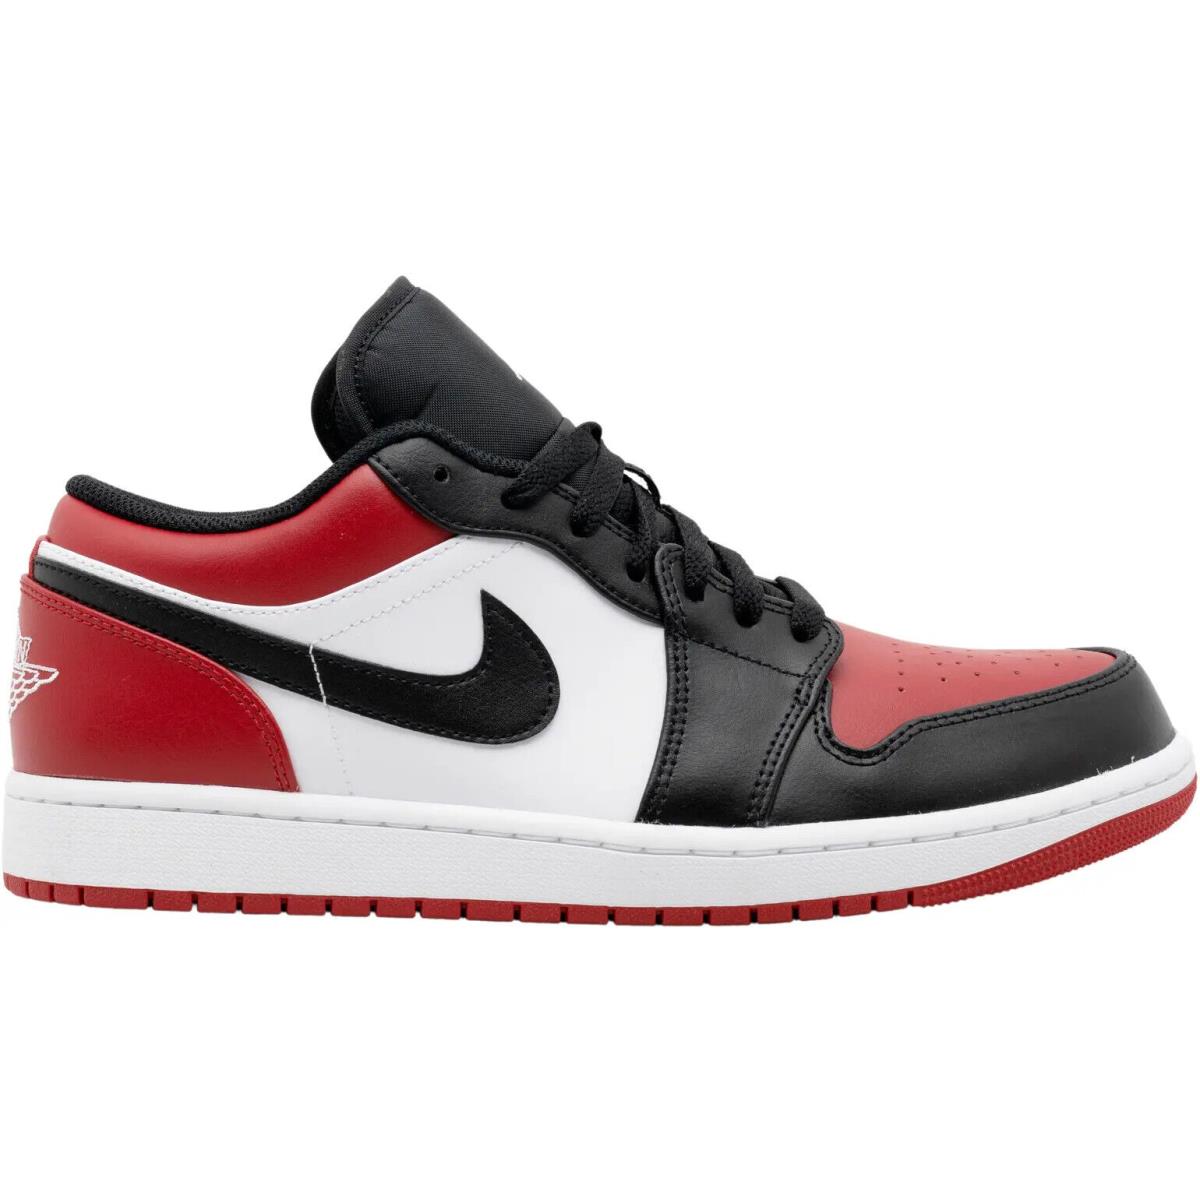 Nike Air Jordan 1 Low Bred Toe Sizes 8-15 Men`s Basketball Shoes. 553558-612